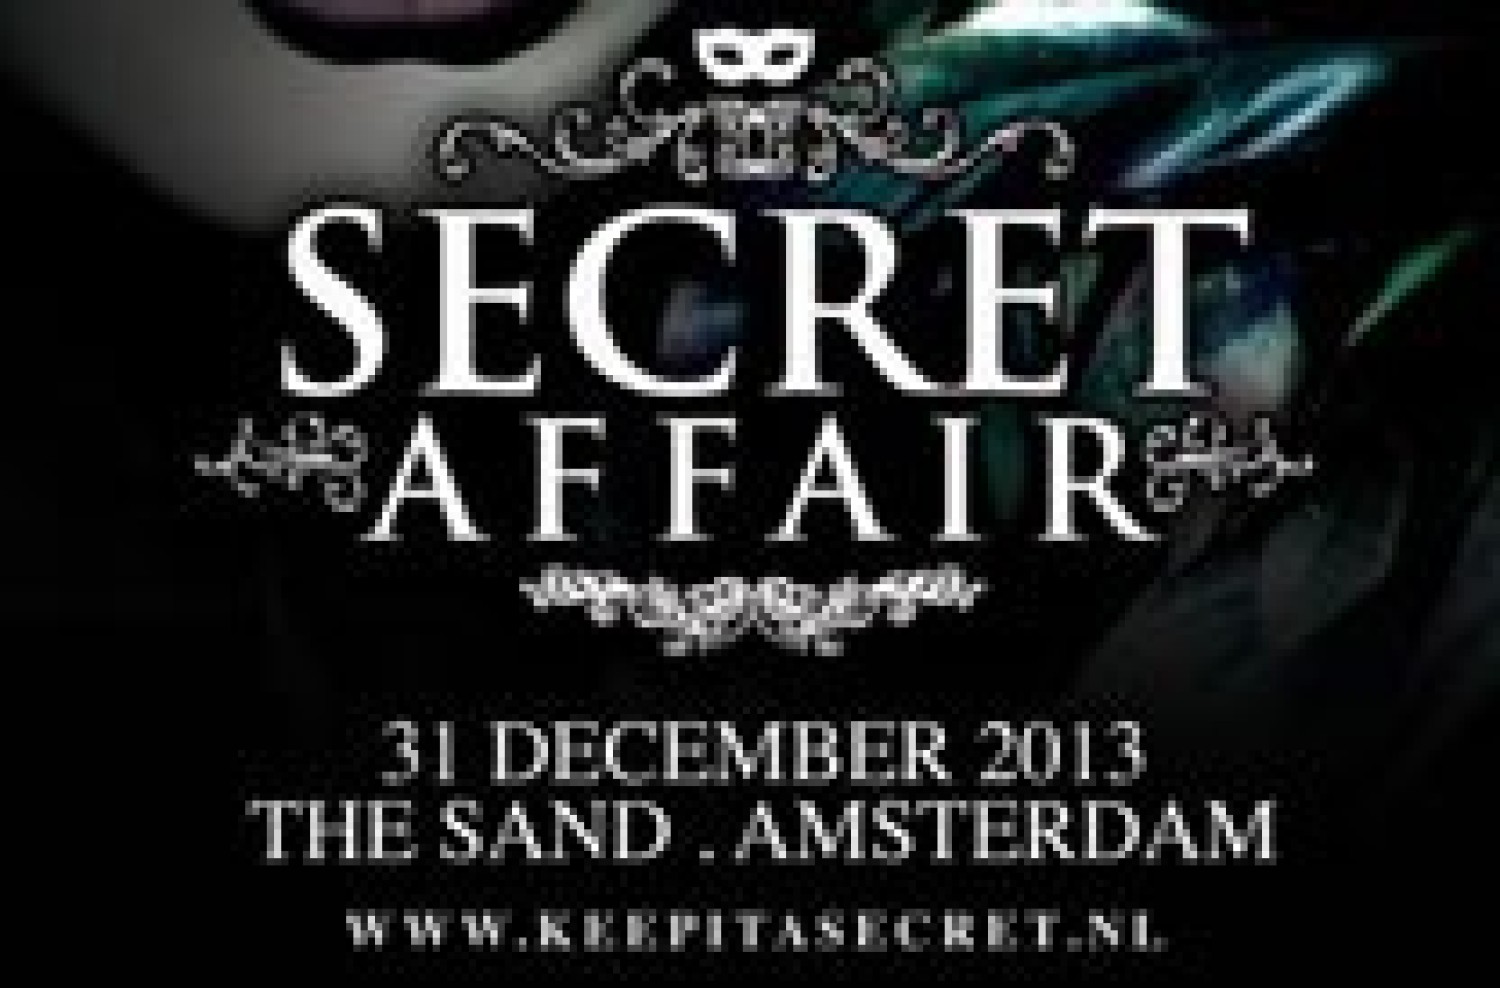 Party nieuws: Op 31 december is Secret Affair NYE dé ‘place to be’